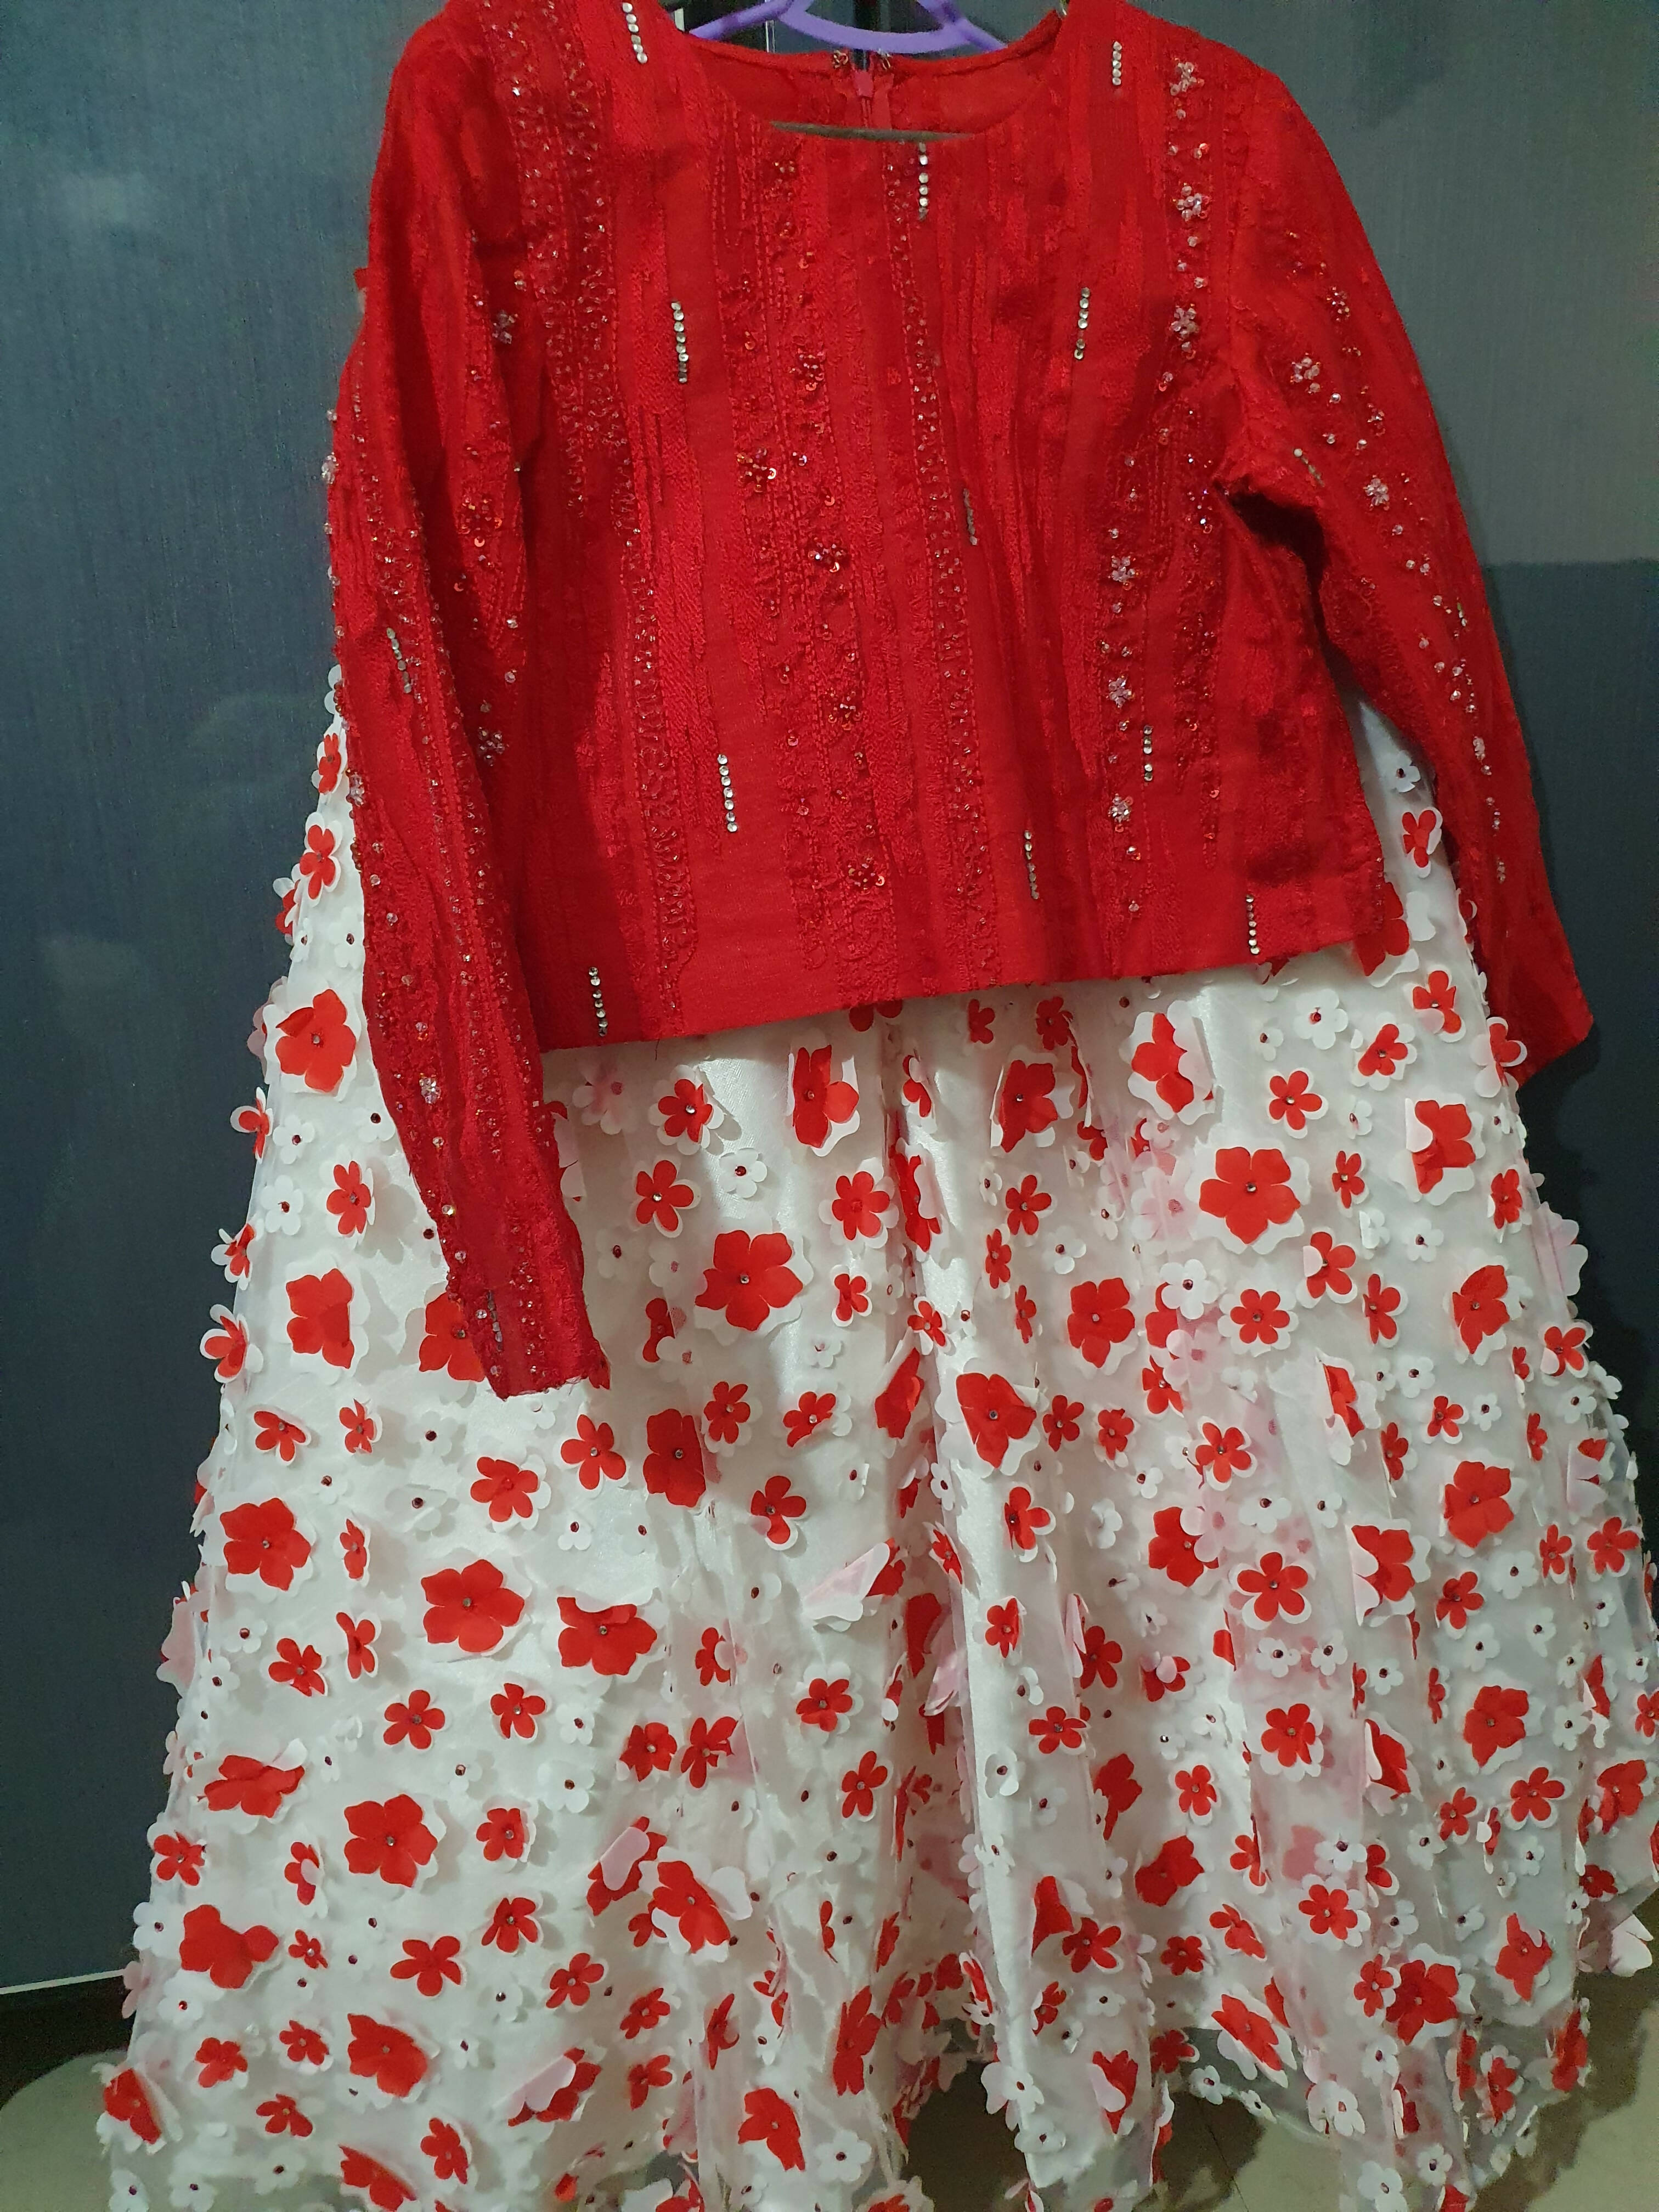 Red Skirts | Girls Skirts & Dresses | Preloved